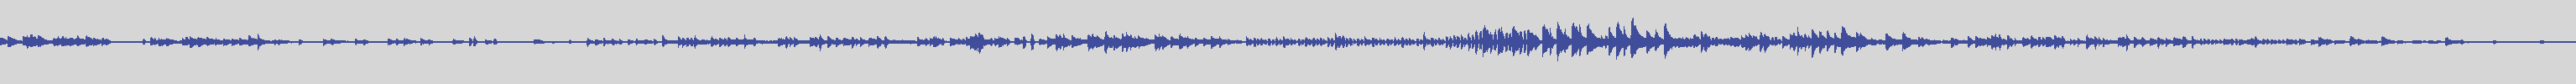 big_music_classic [BMC006] Claude Debussy, Corrado Rossi - Jimbo's Lullaby [] audio wave form